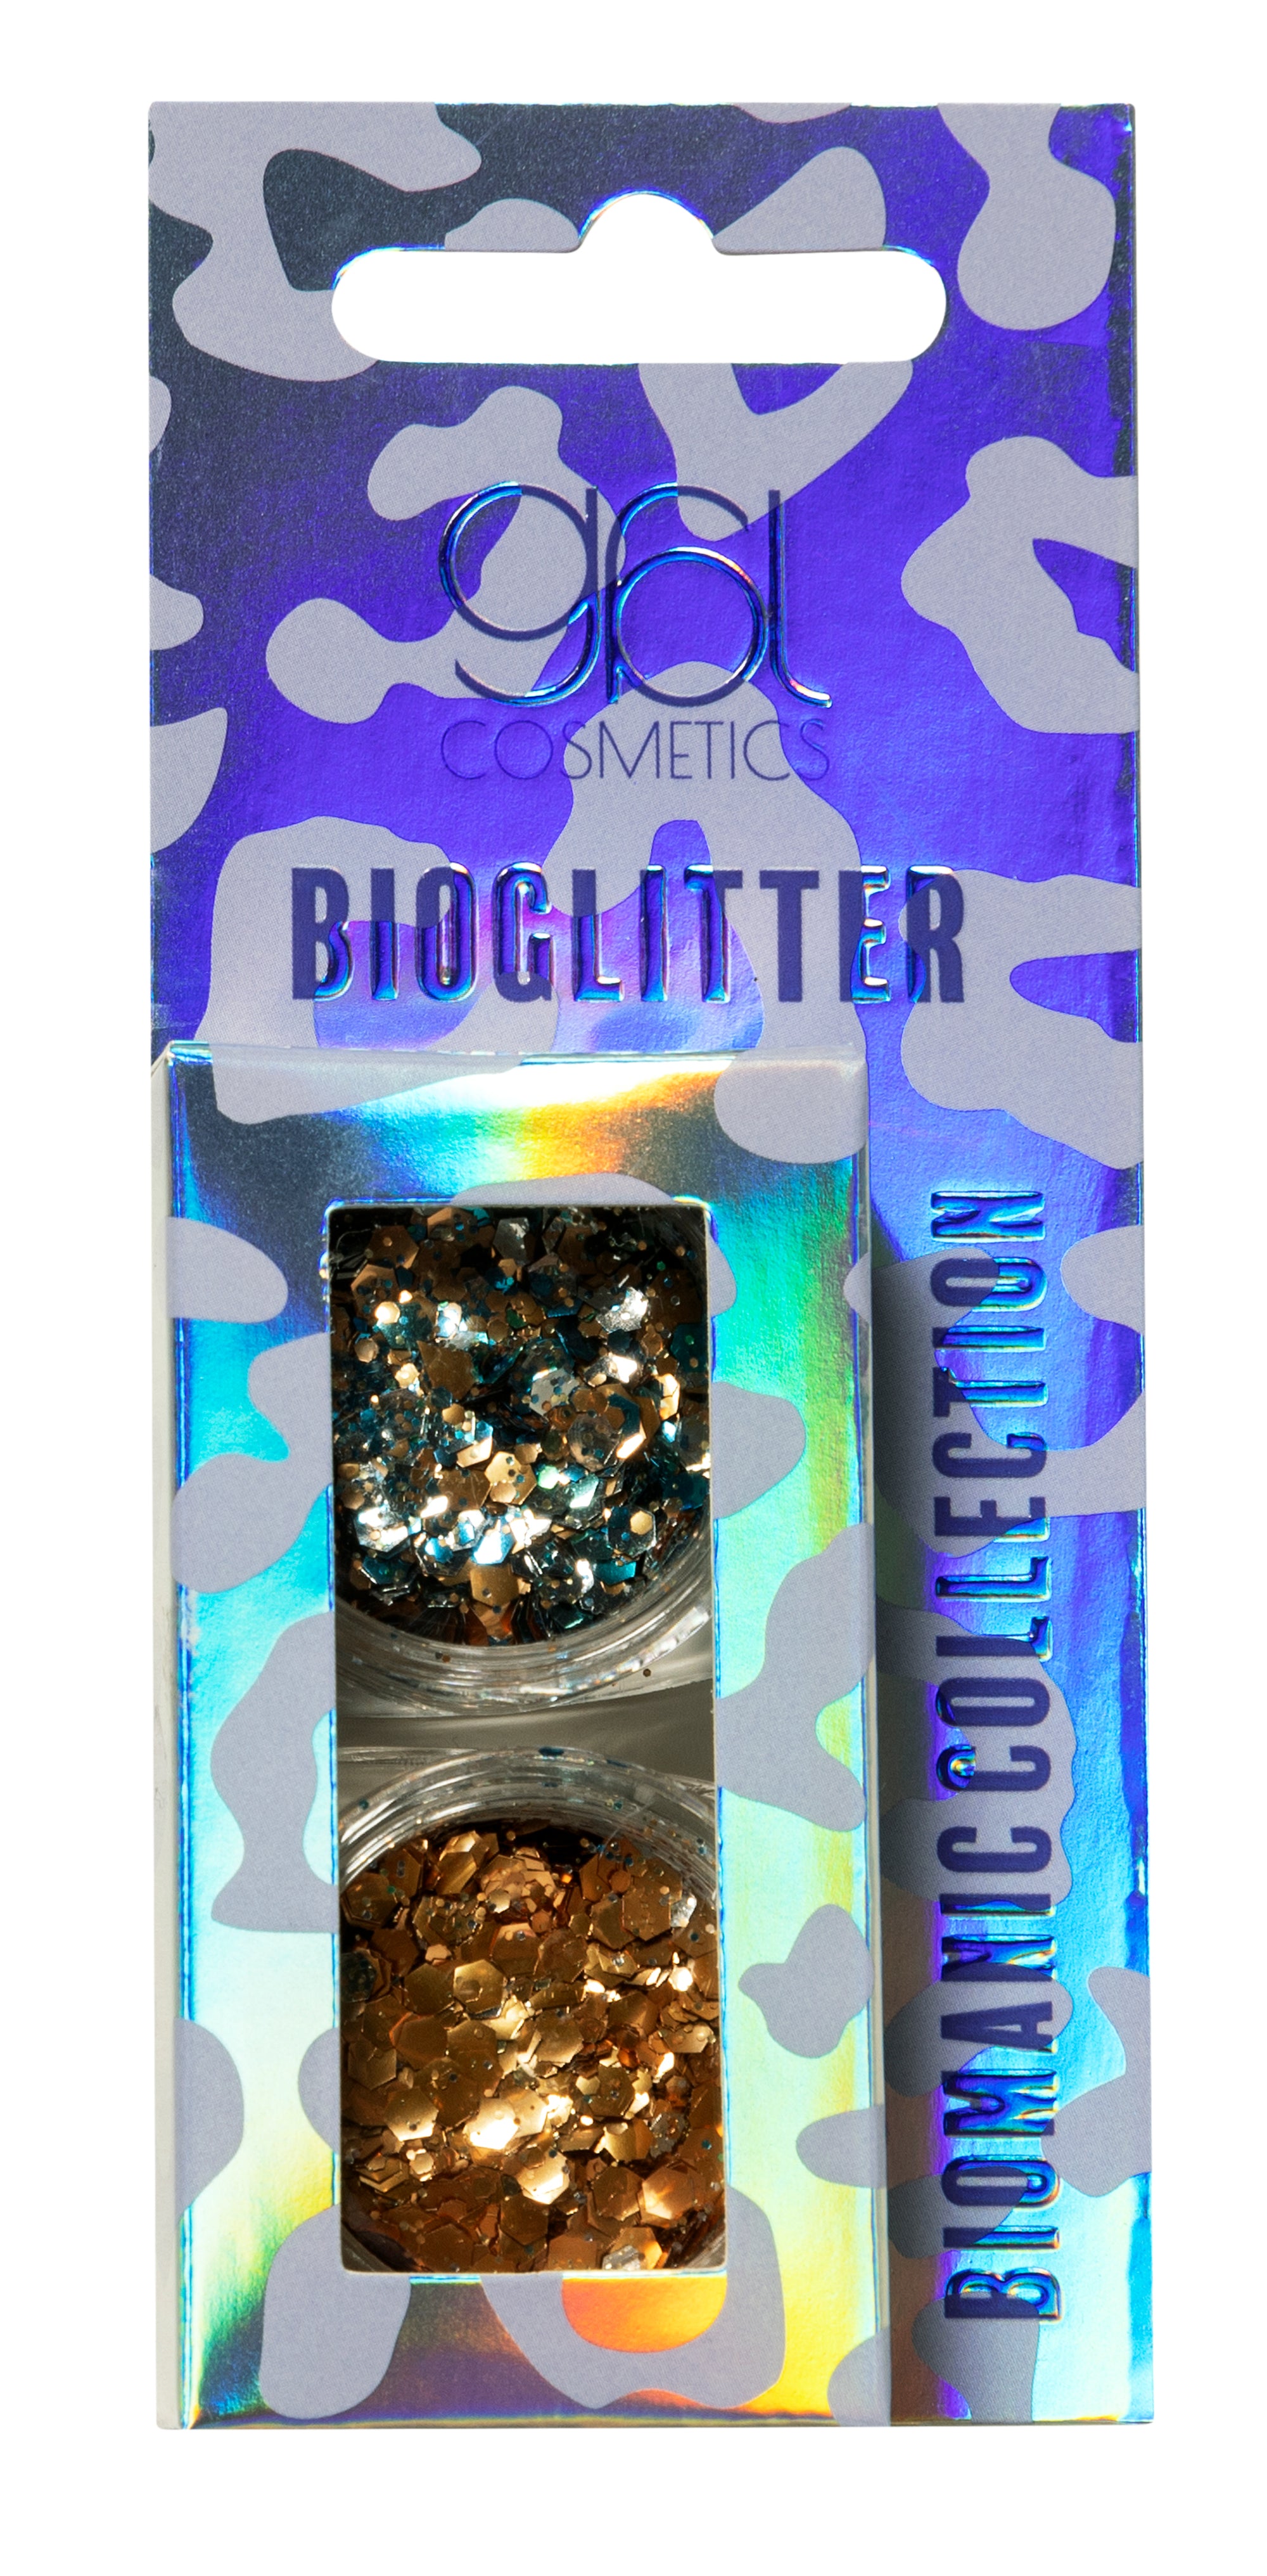 Biomanic bioglitter Lunar set